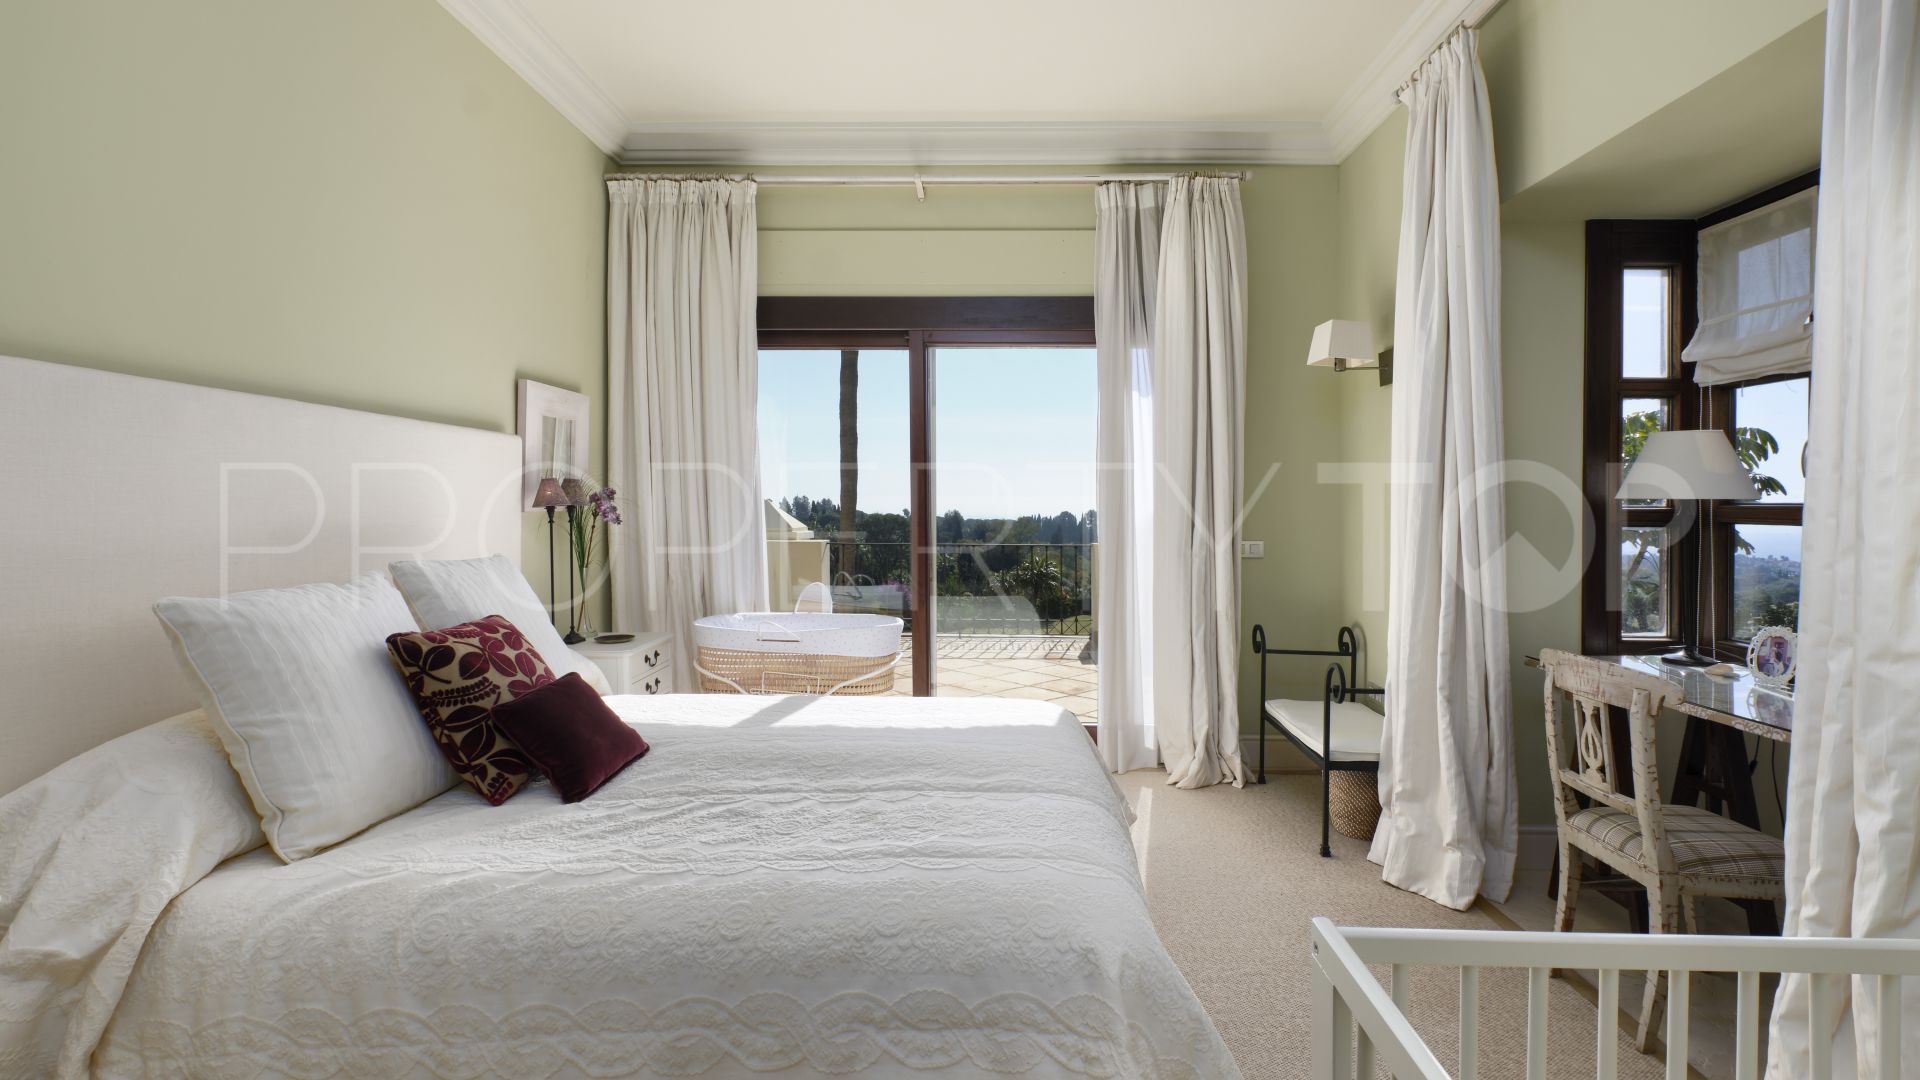 5 bedrooms villa in Marbella Hill Club for sale